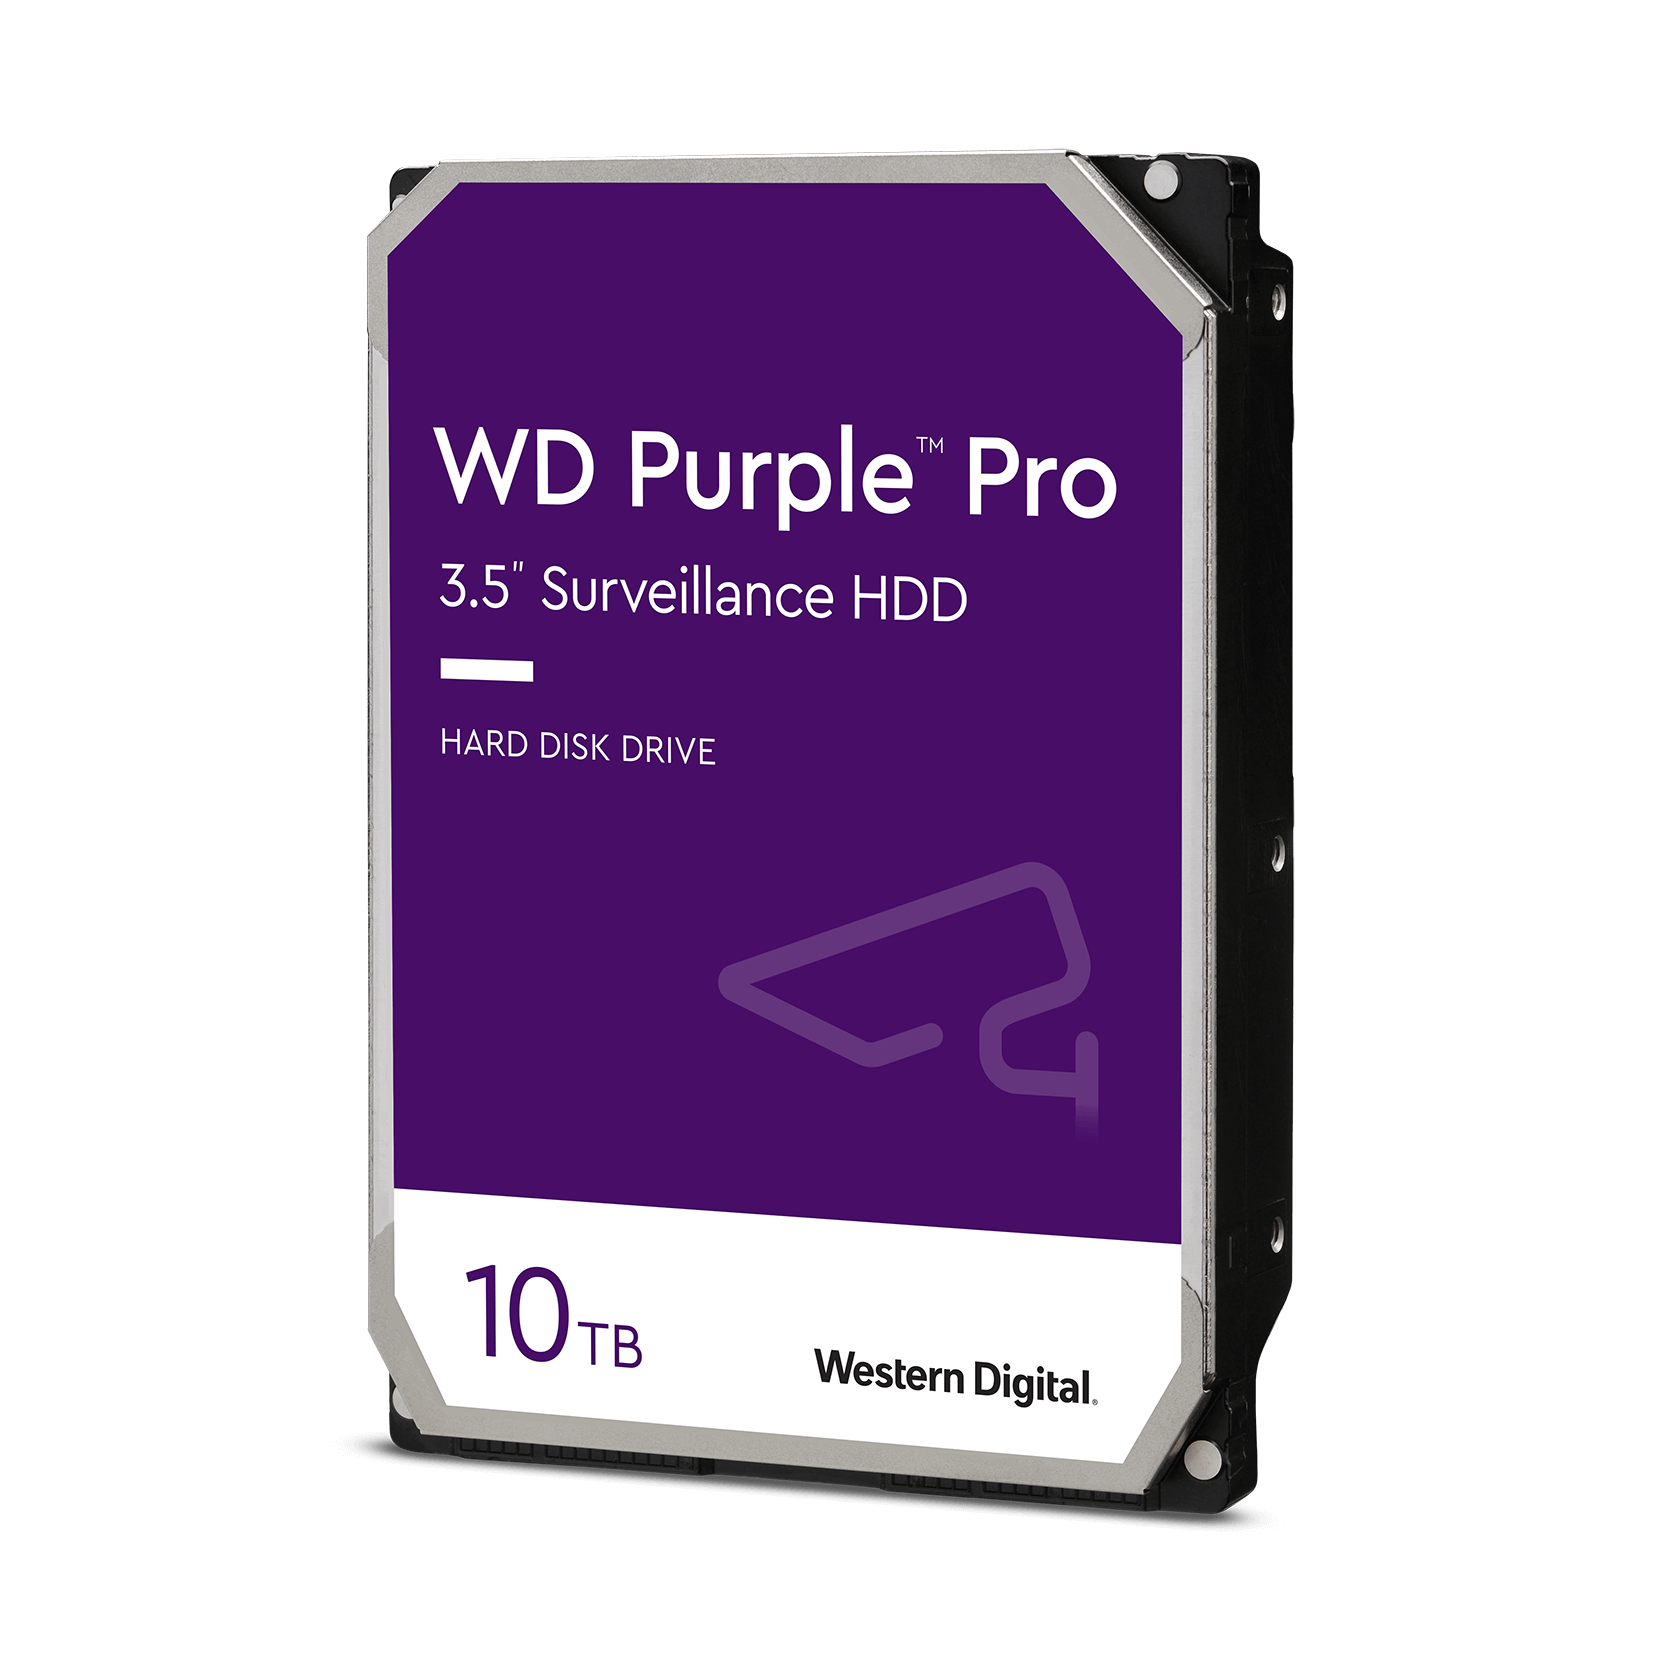 Western Digital 10TB WD Pro - Surveillance, Purple Hard Drive - WD101PURP